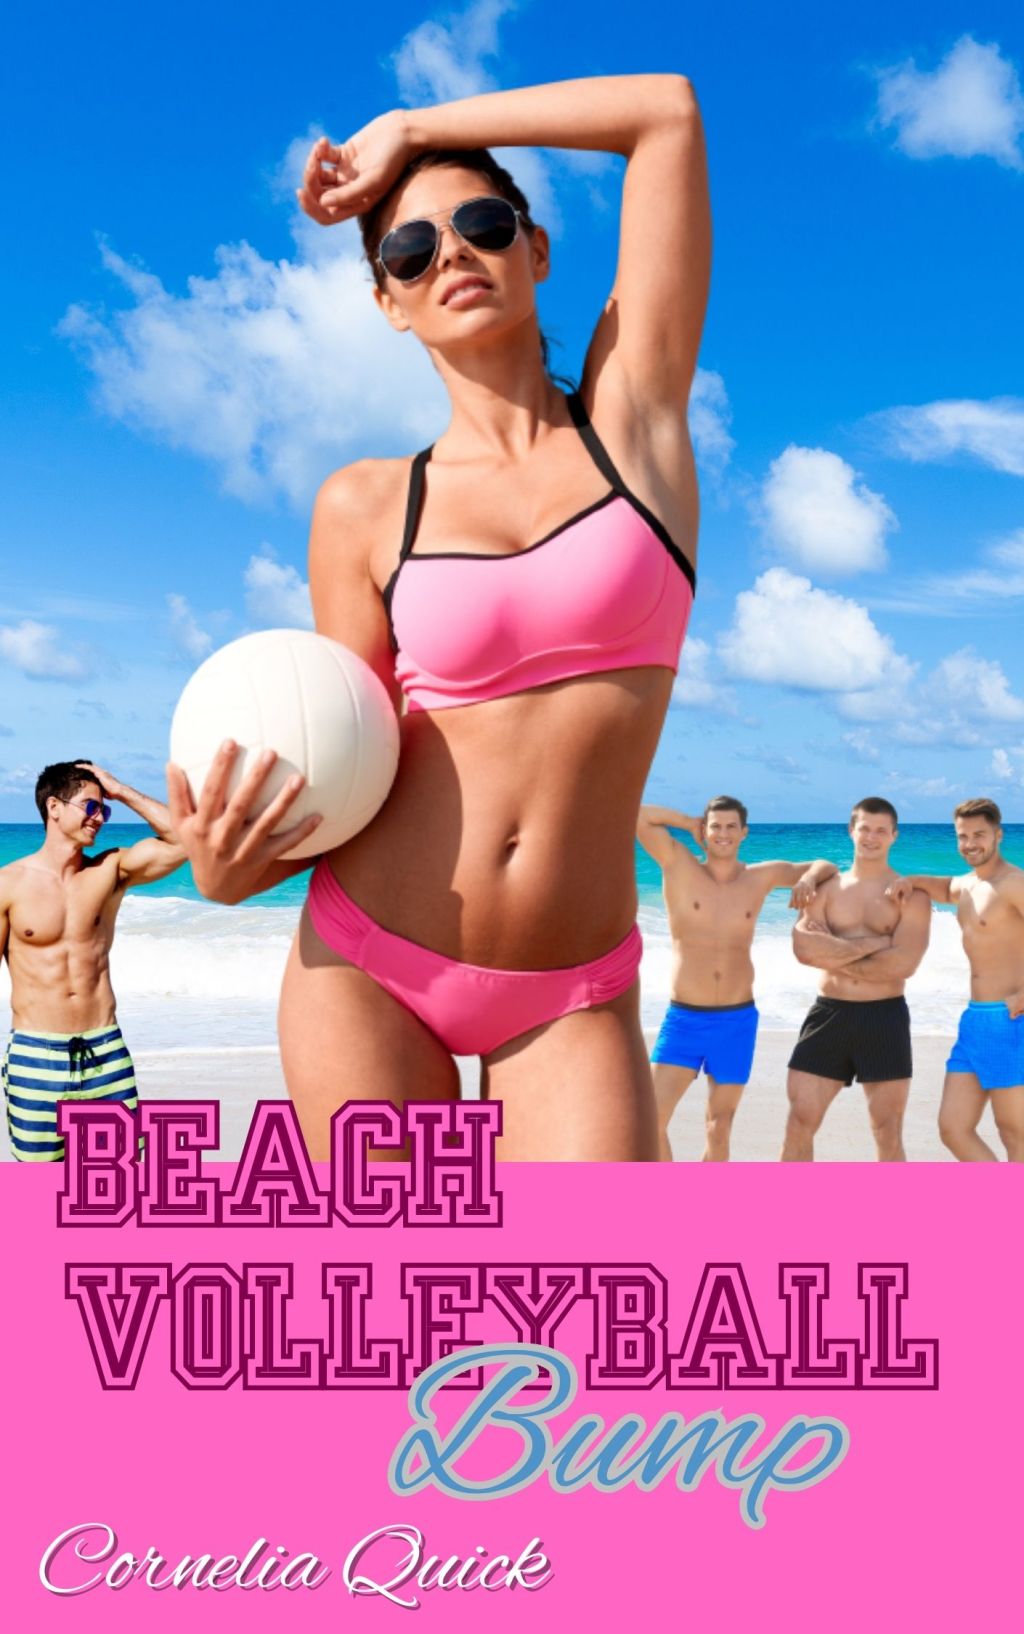 Get “Beach Volleyball Bump” FREE through May 6!